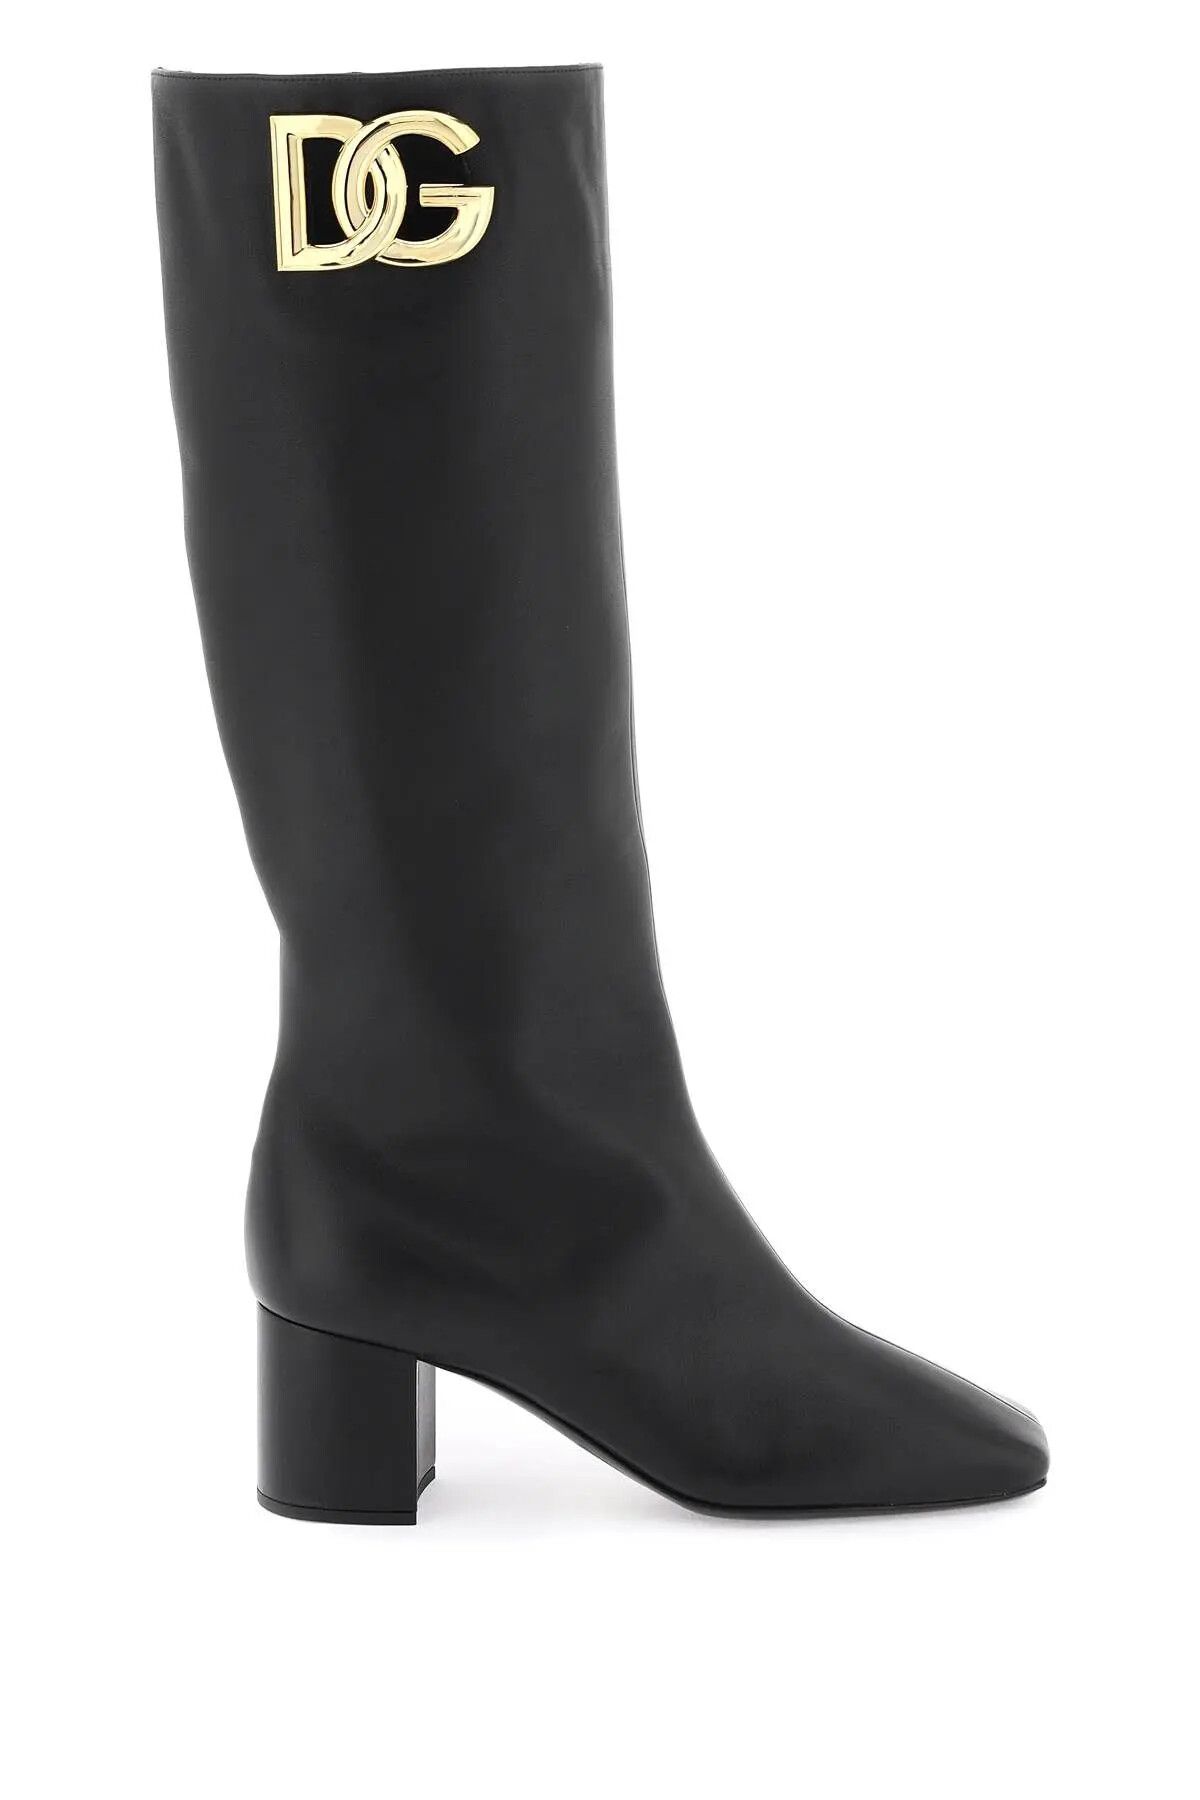 Dolce & Gabbana o1s22i1n0823 Boots in Black | Grailed